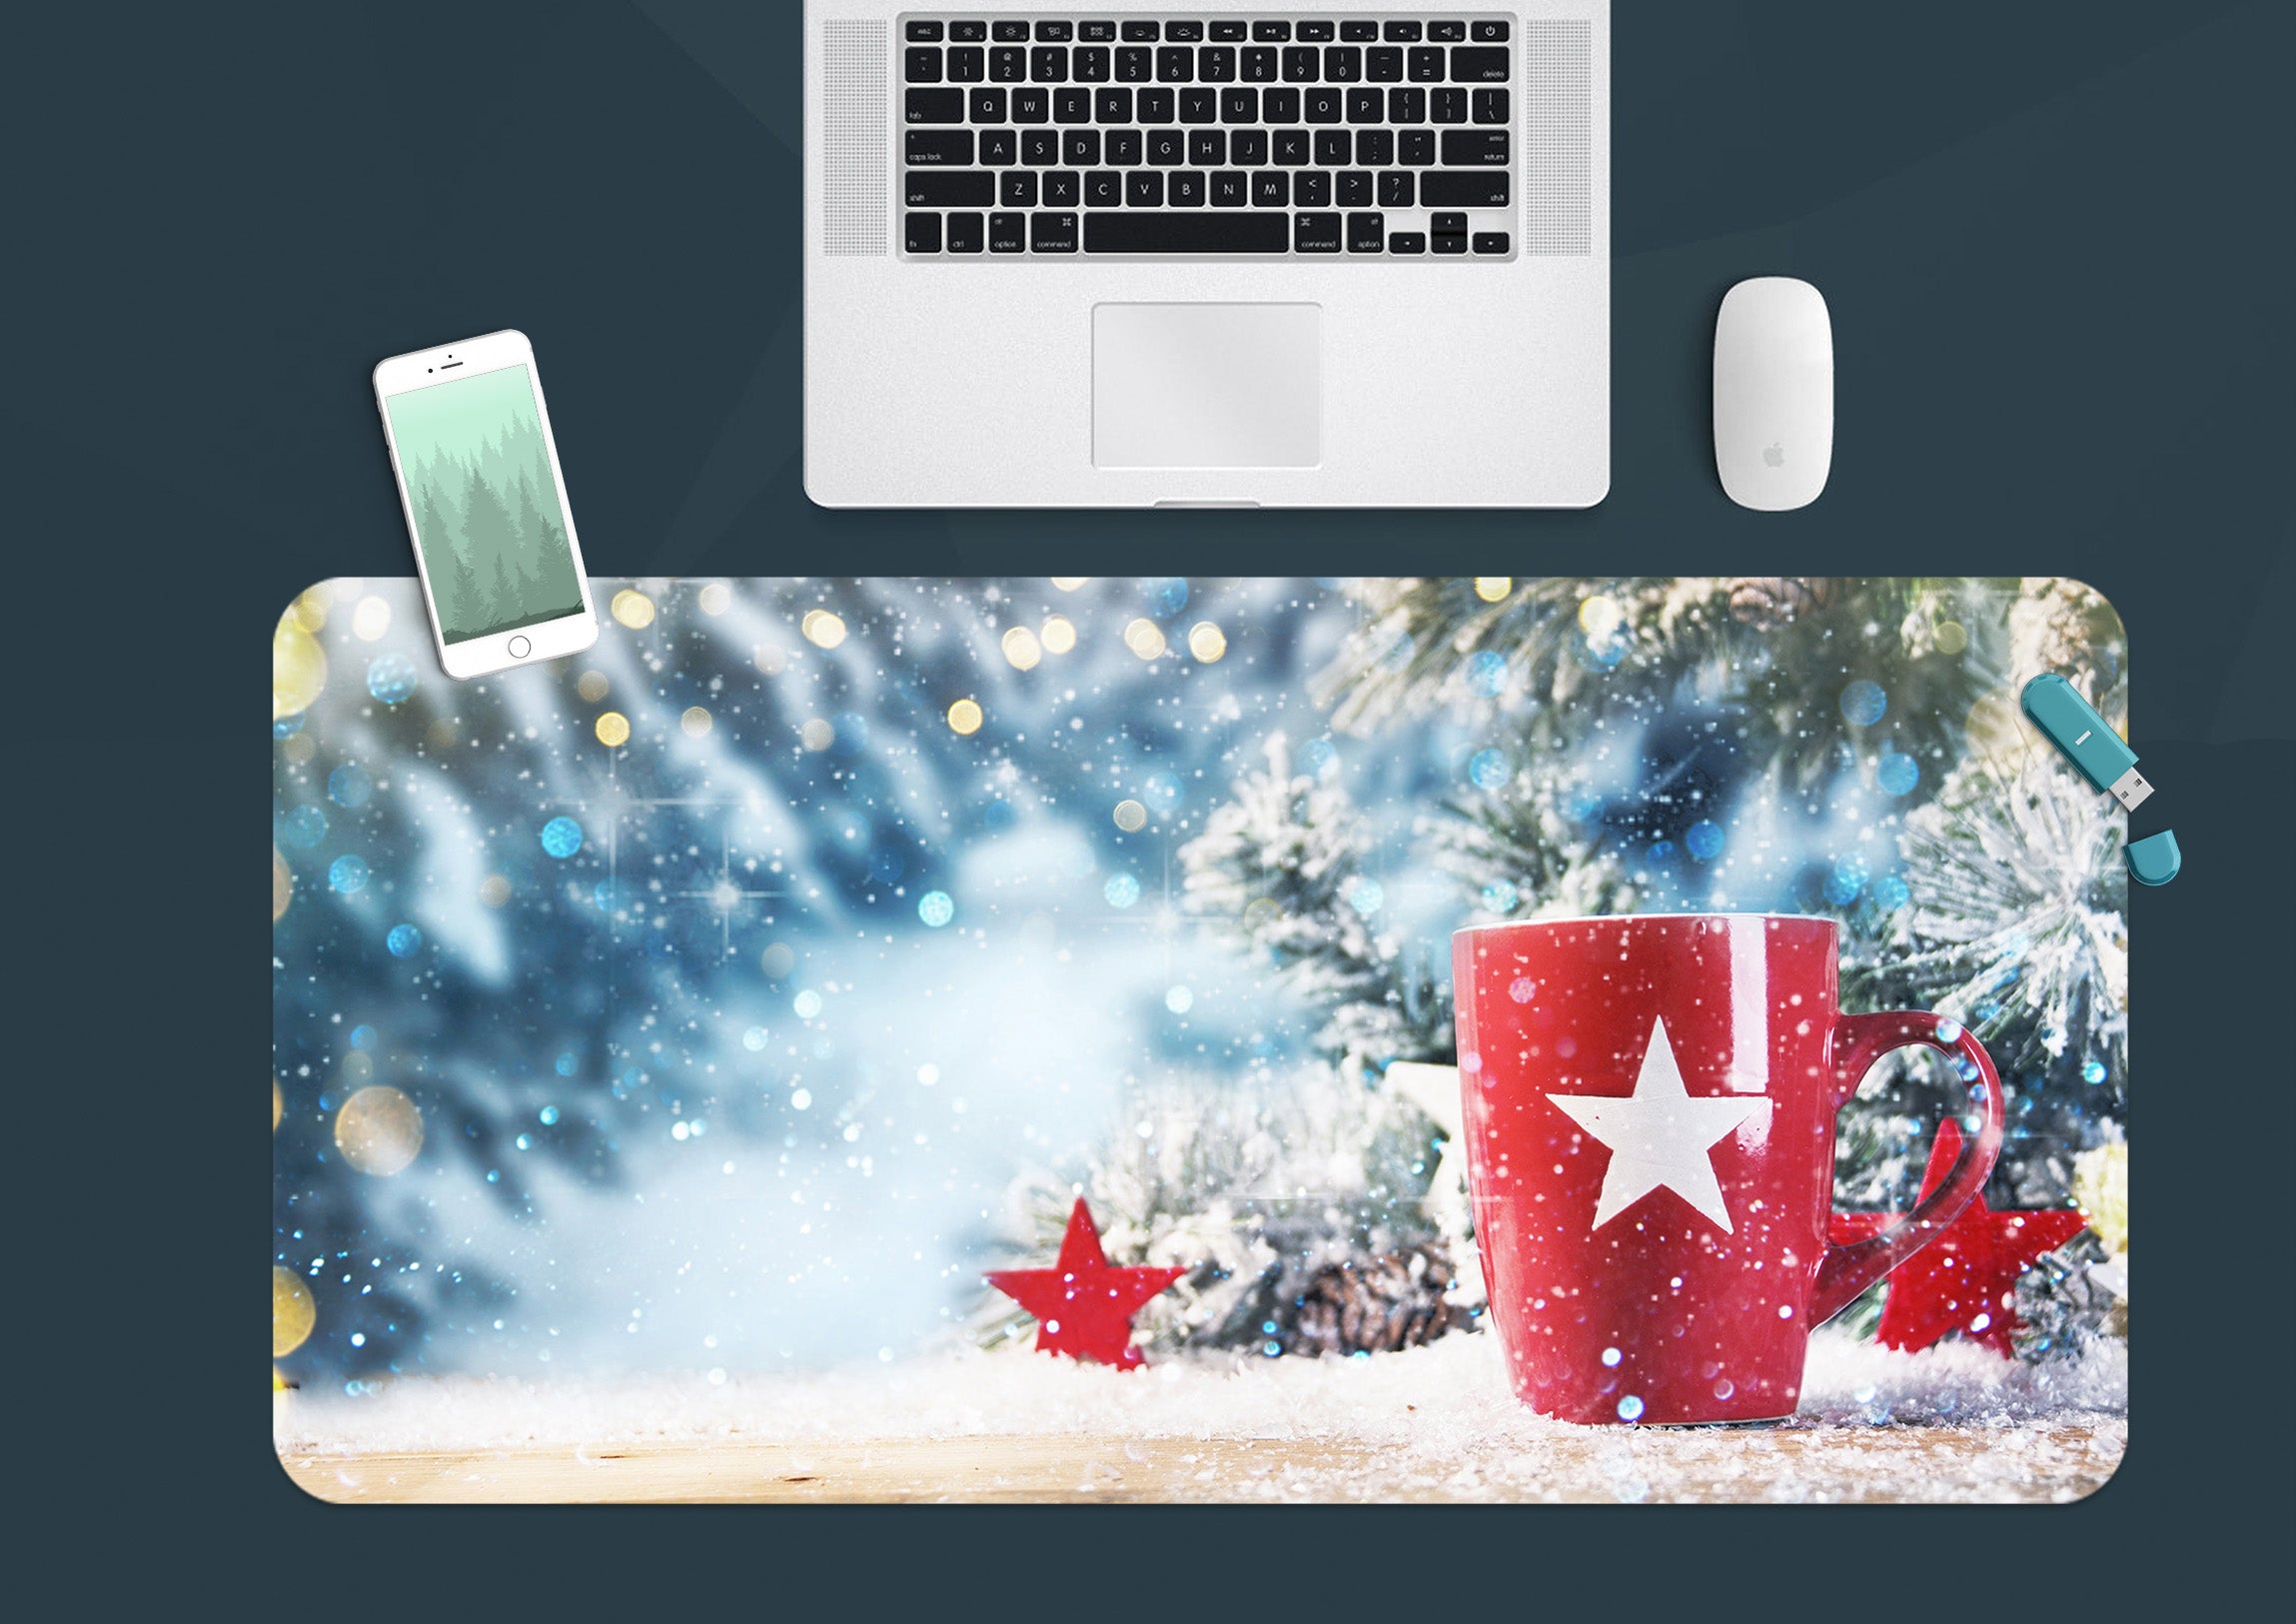 3D Snow Red Cup 53197 Christmas Desk Mat Xmas